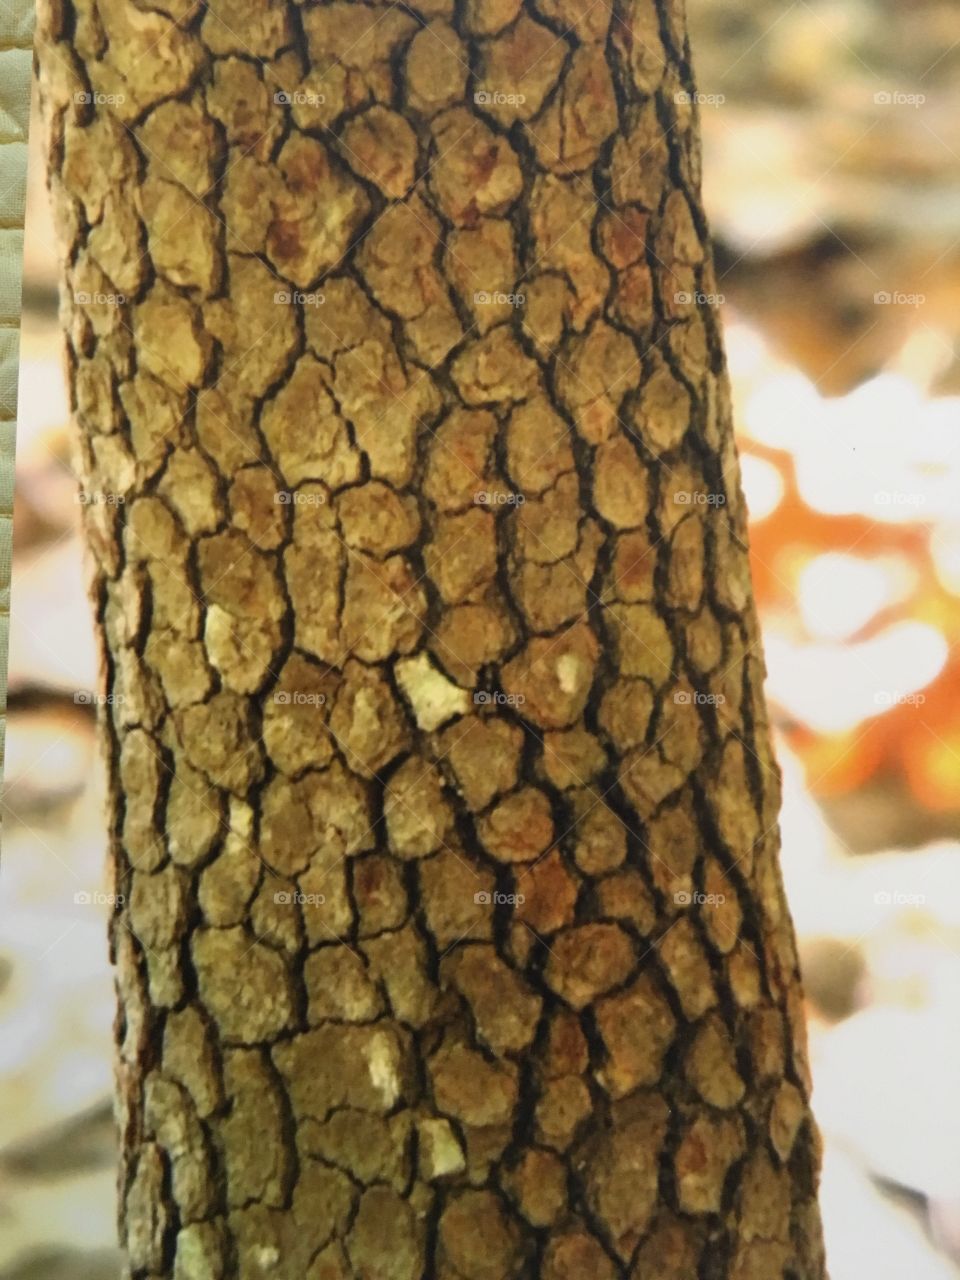 Patterns in bark